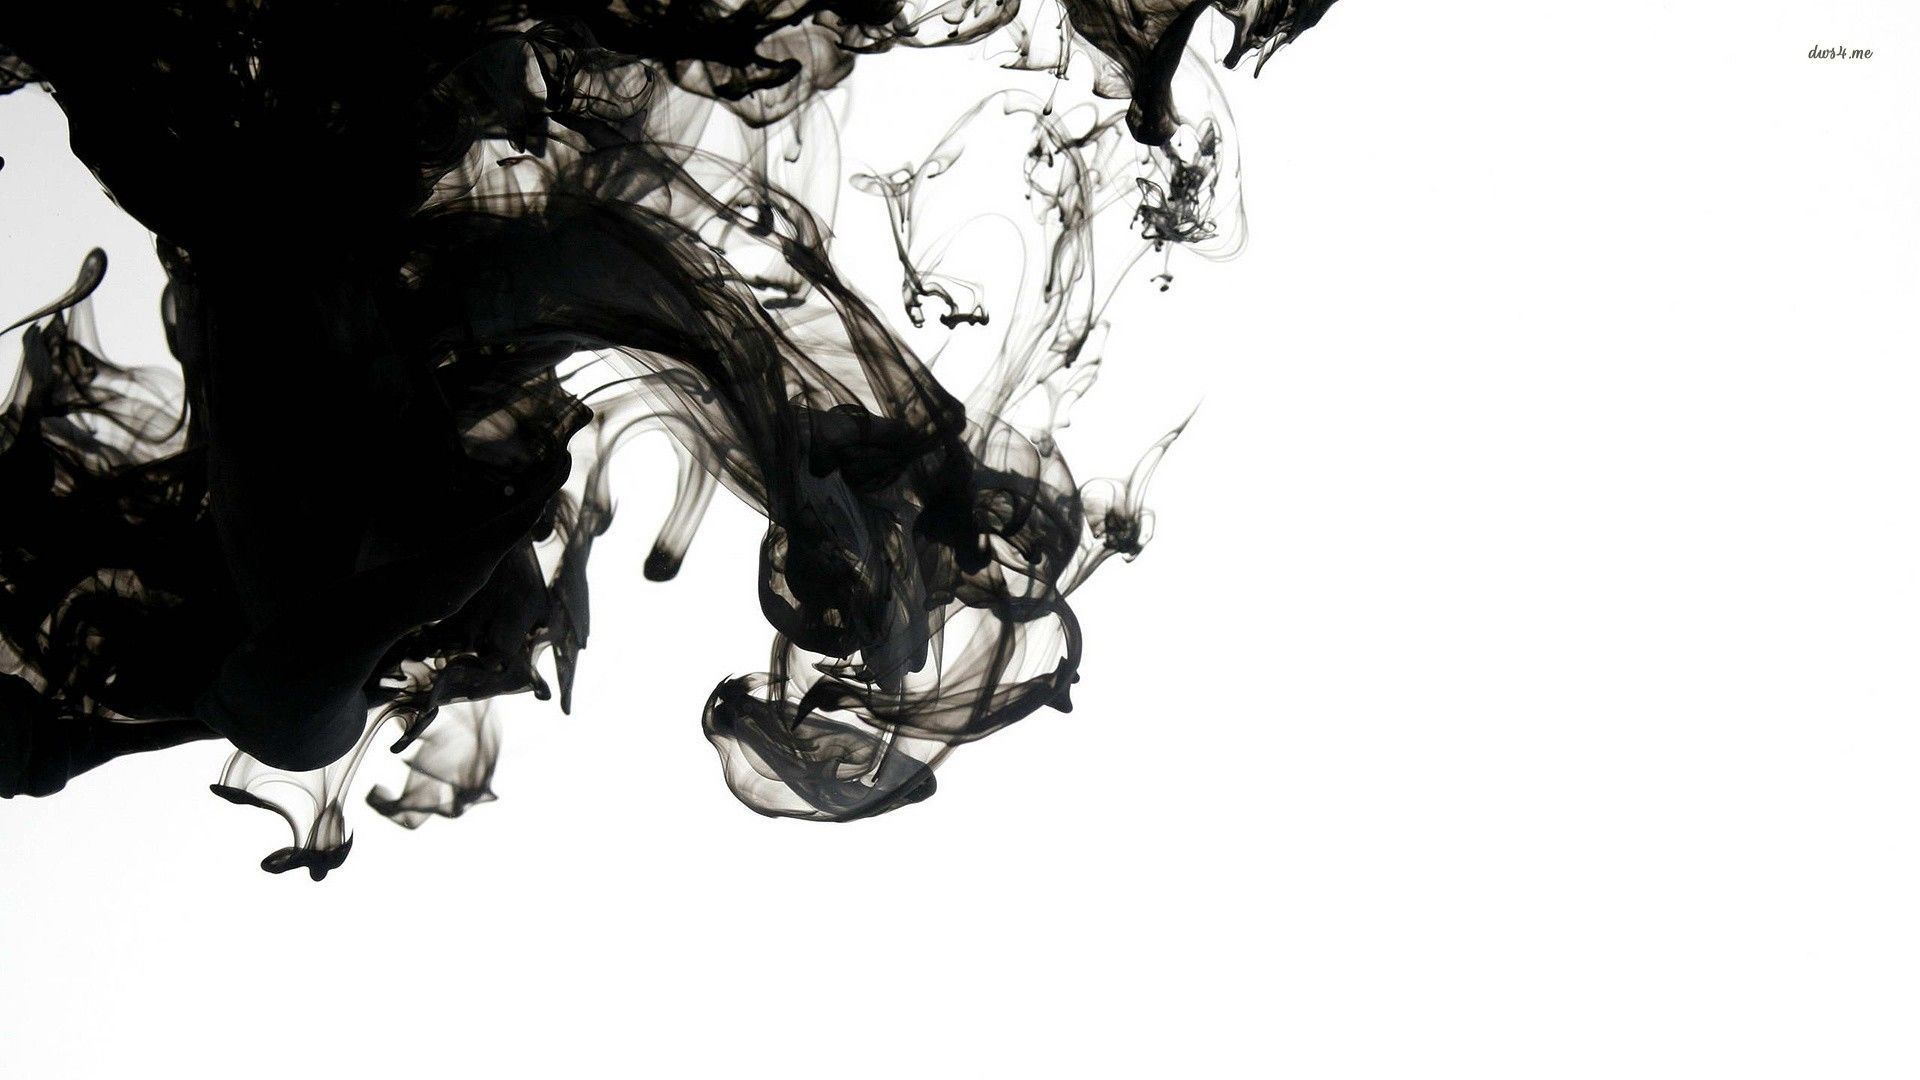 Smoke for art. Smoke wallpaper, Black and white abstract, Abstract